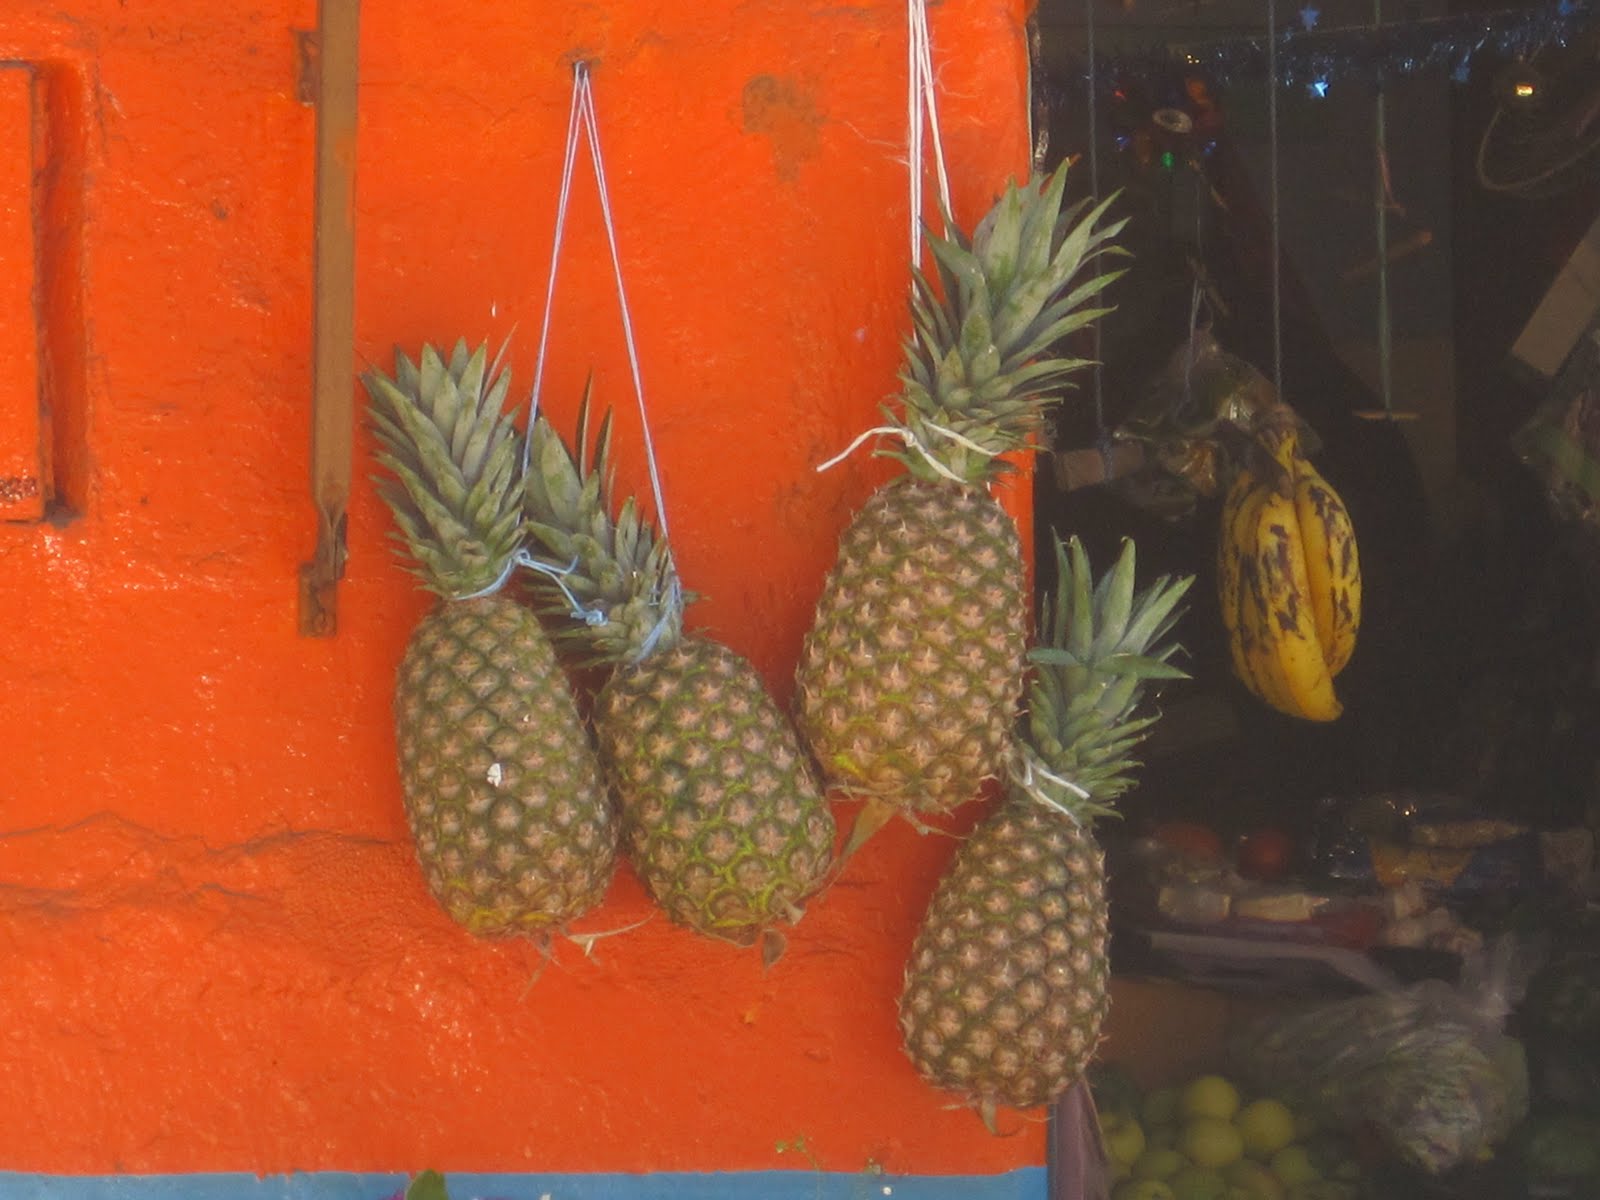 Pineapple , HD Wallpaper & Backgrounds